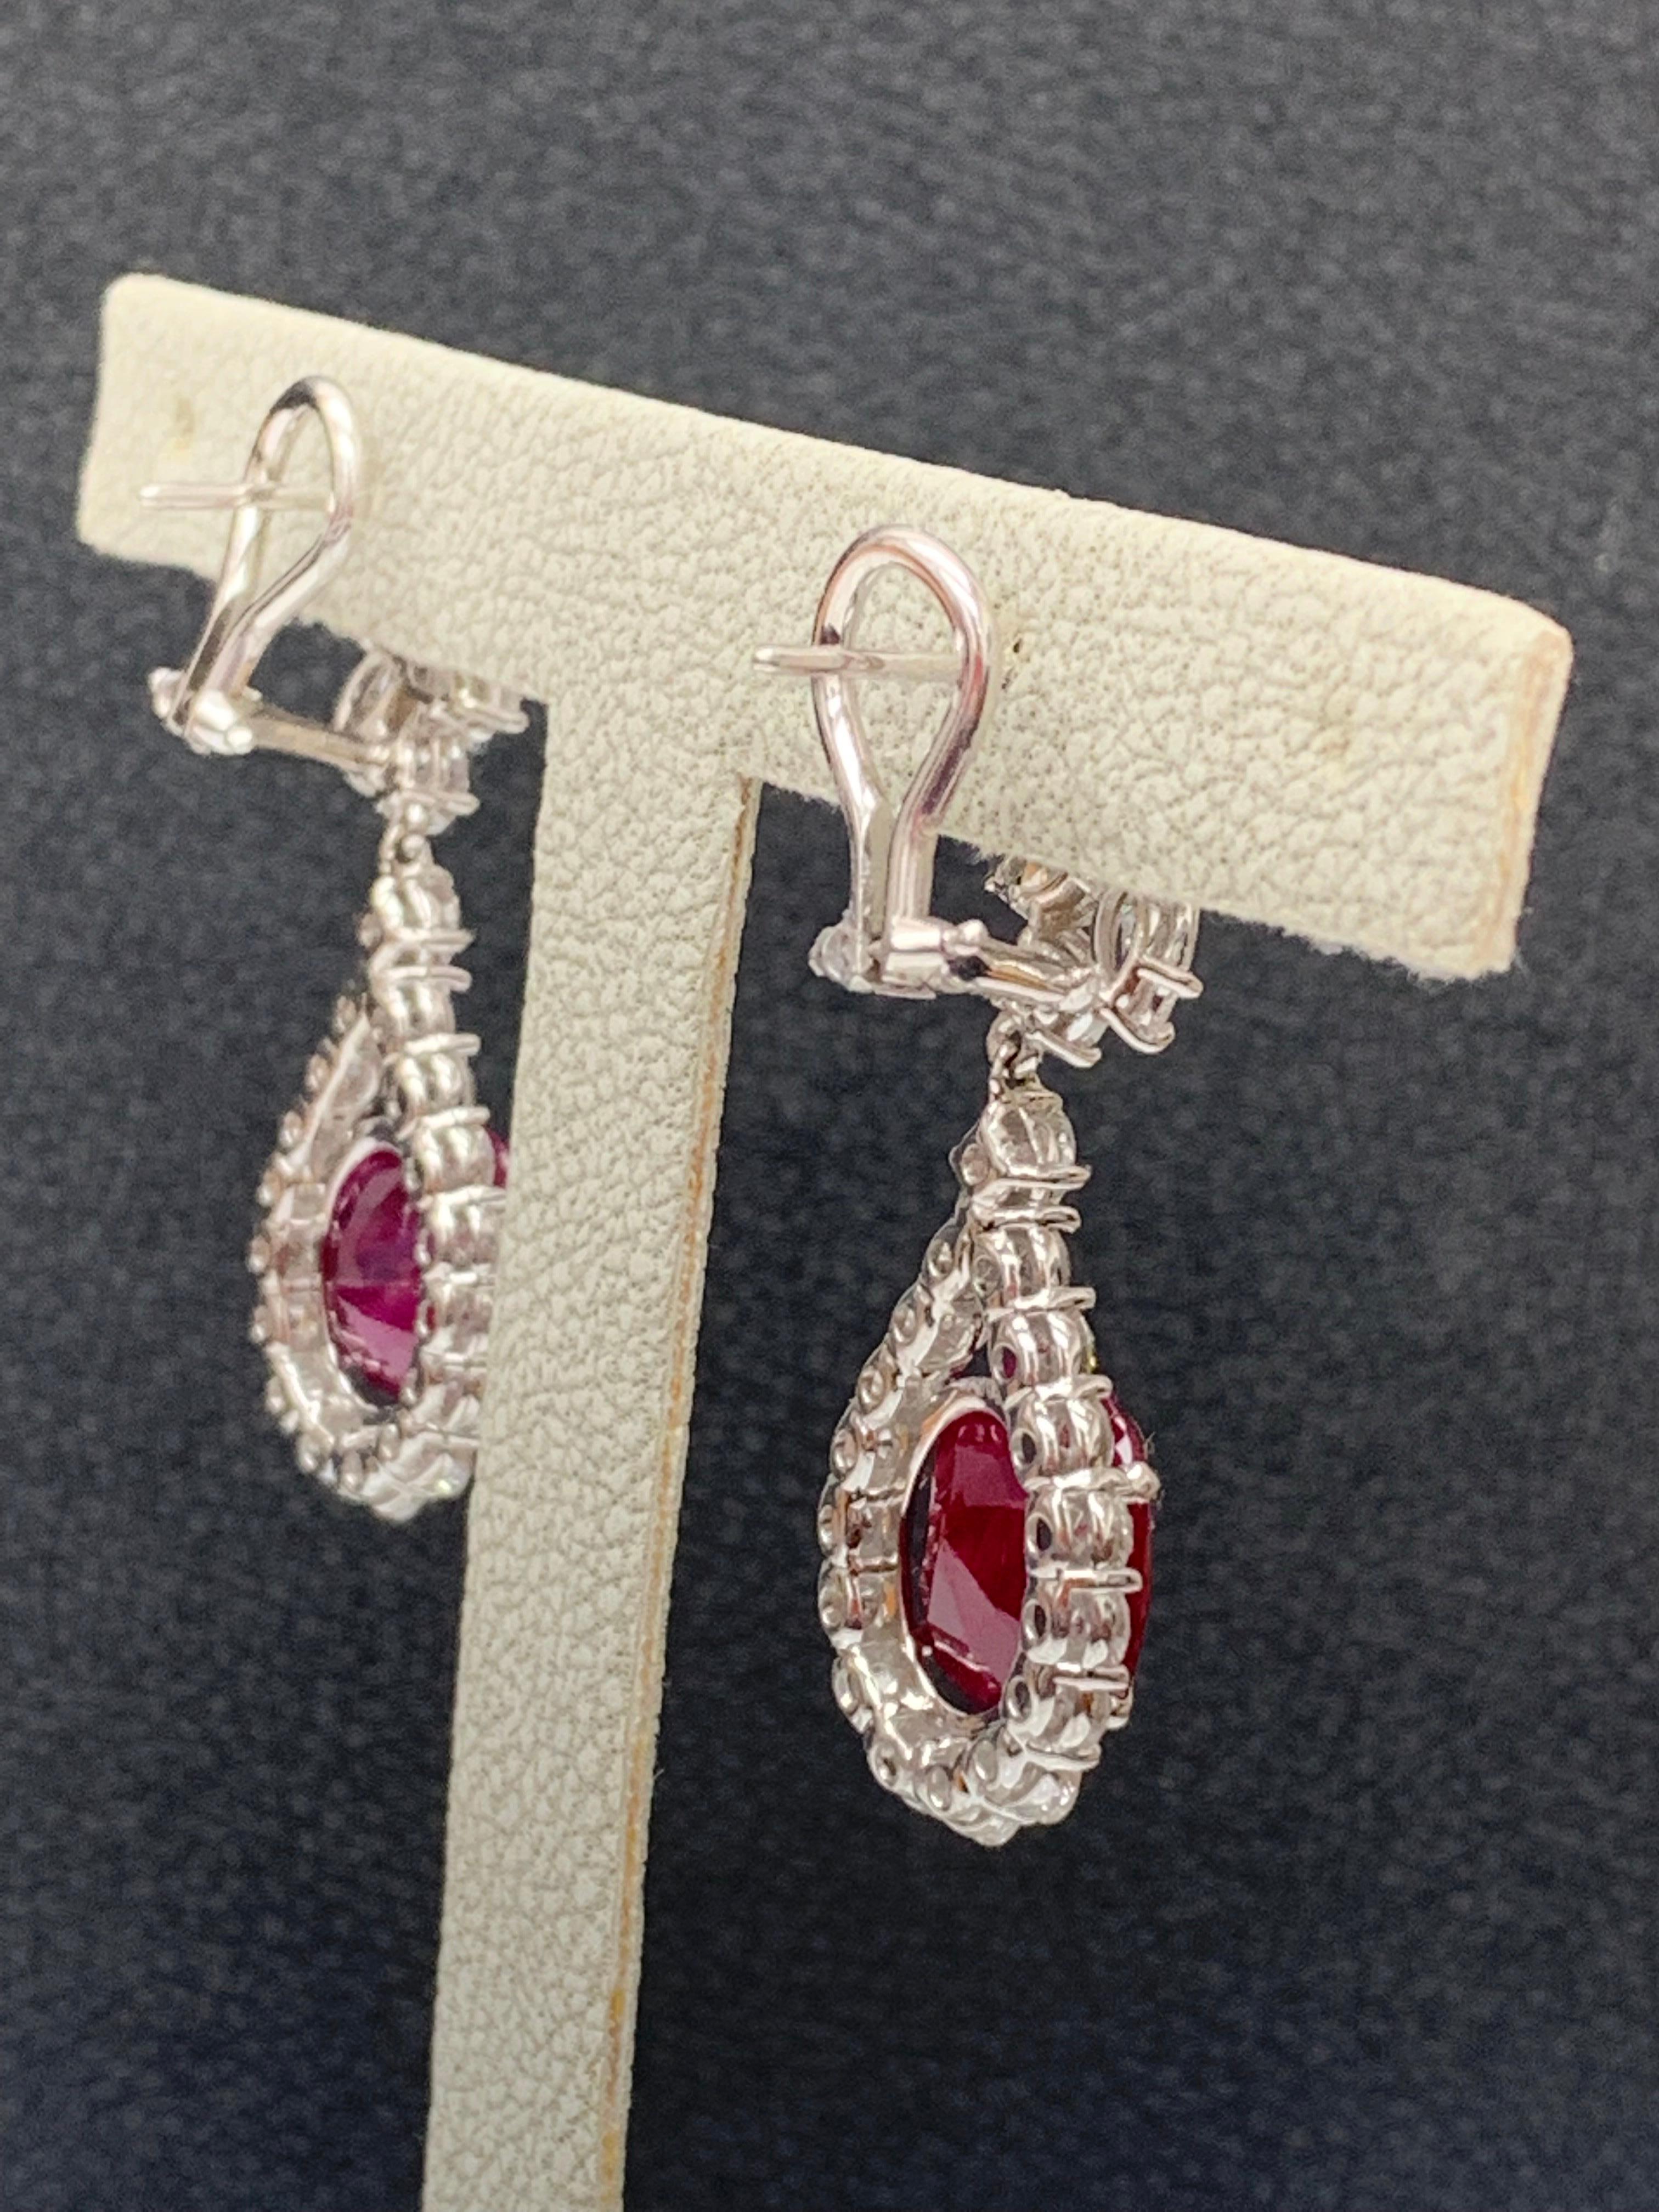 Certified 10.18 Carat Burma Ruby and Diamond Drop Earrings in 18K White Gold For Sale 1